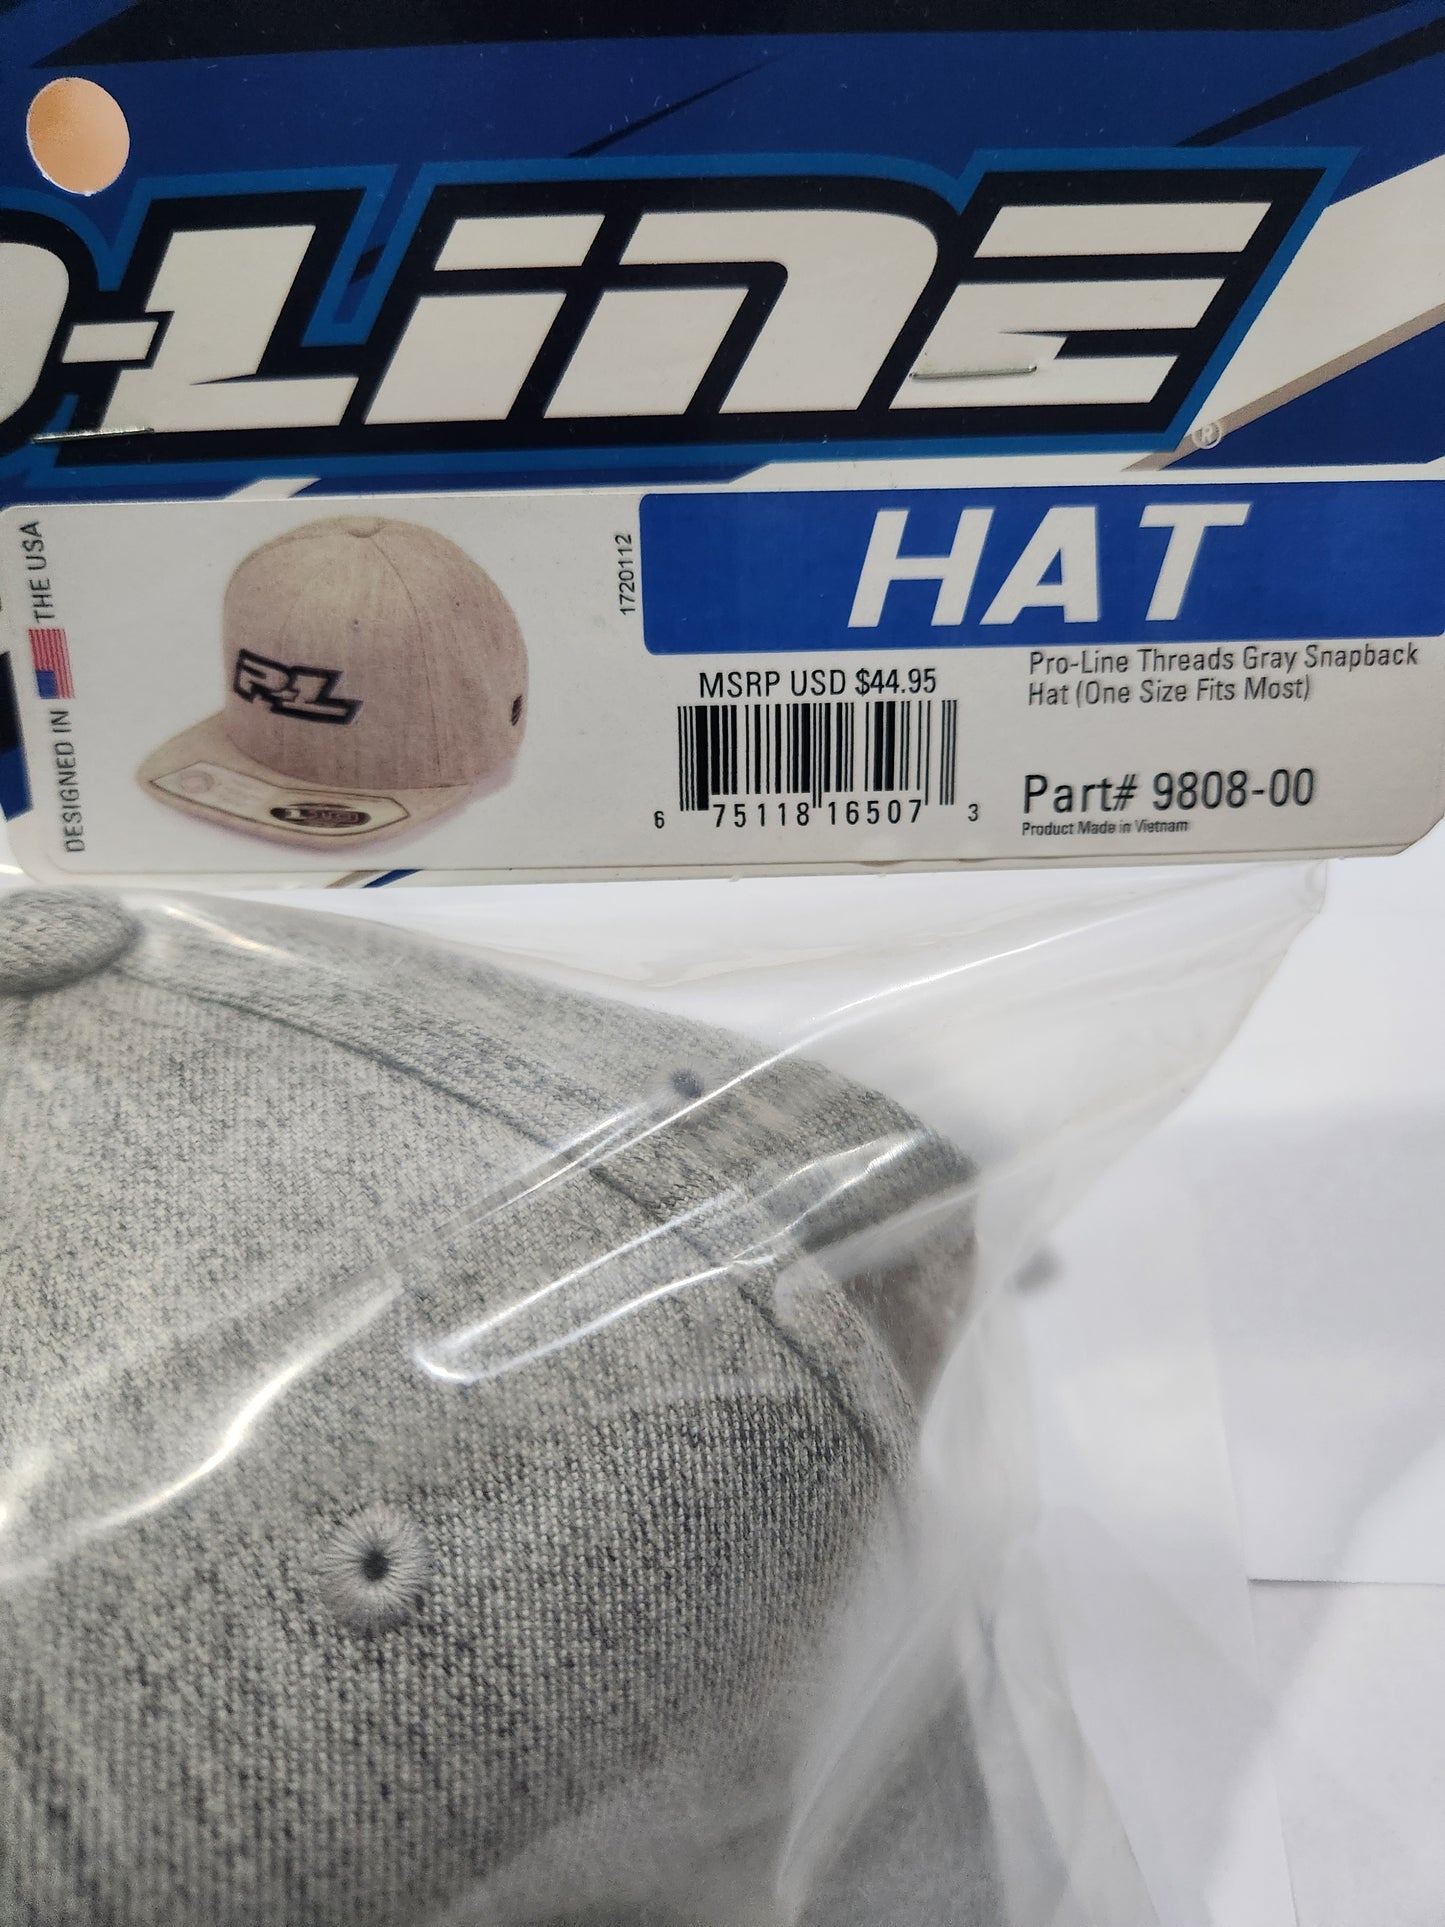 Proline Threads Gray Snapback Hat